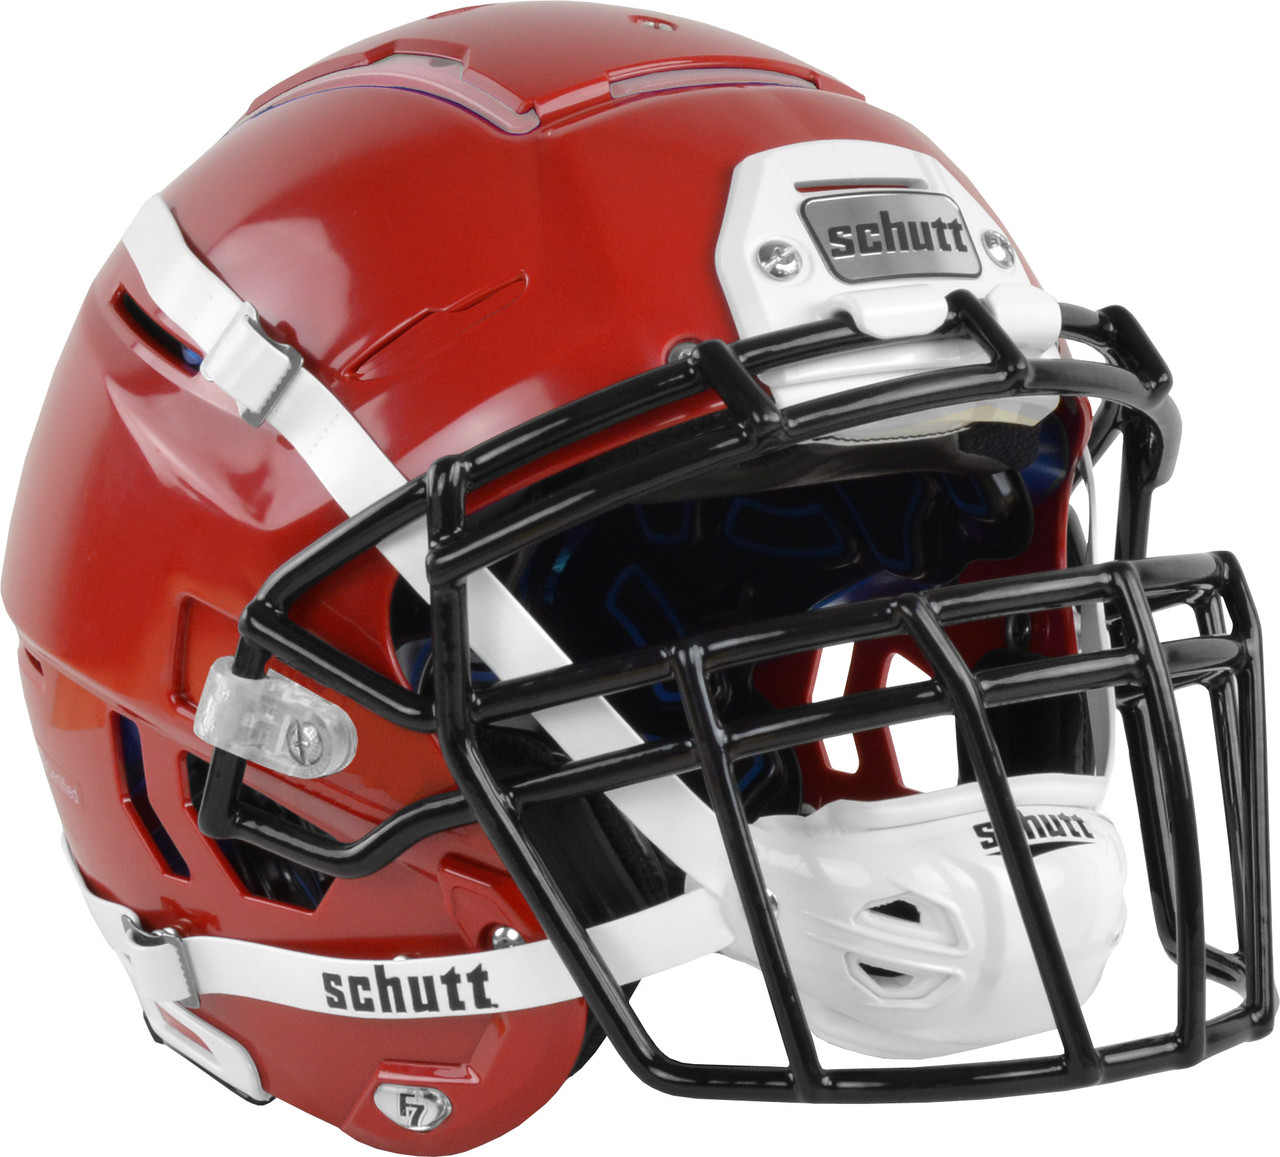 Schutt F7 VTD Adult Football Helmet - Sports Unlimited